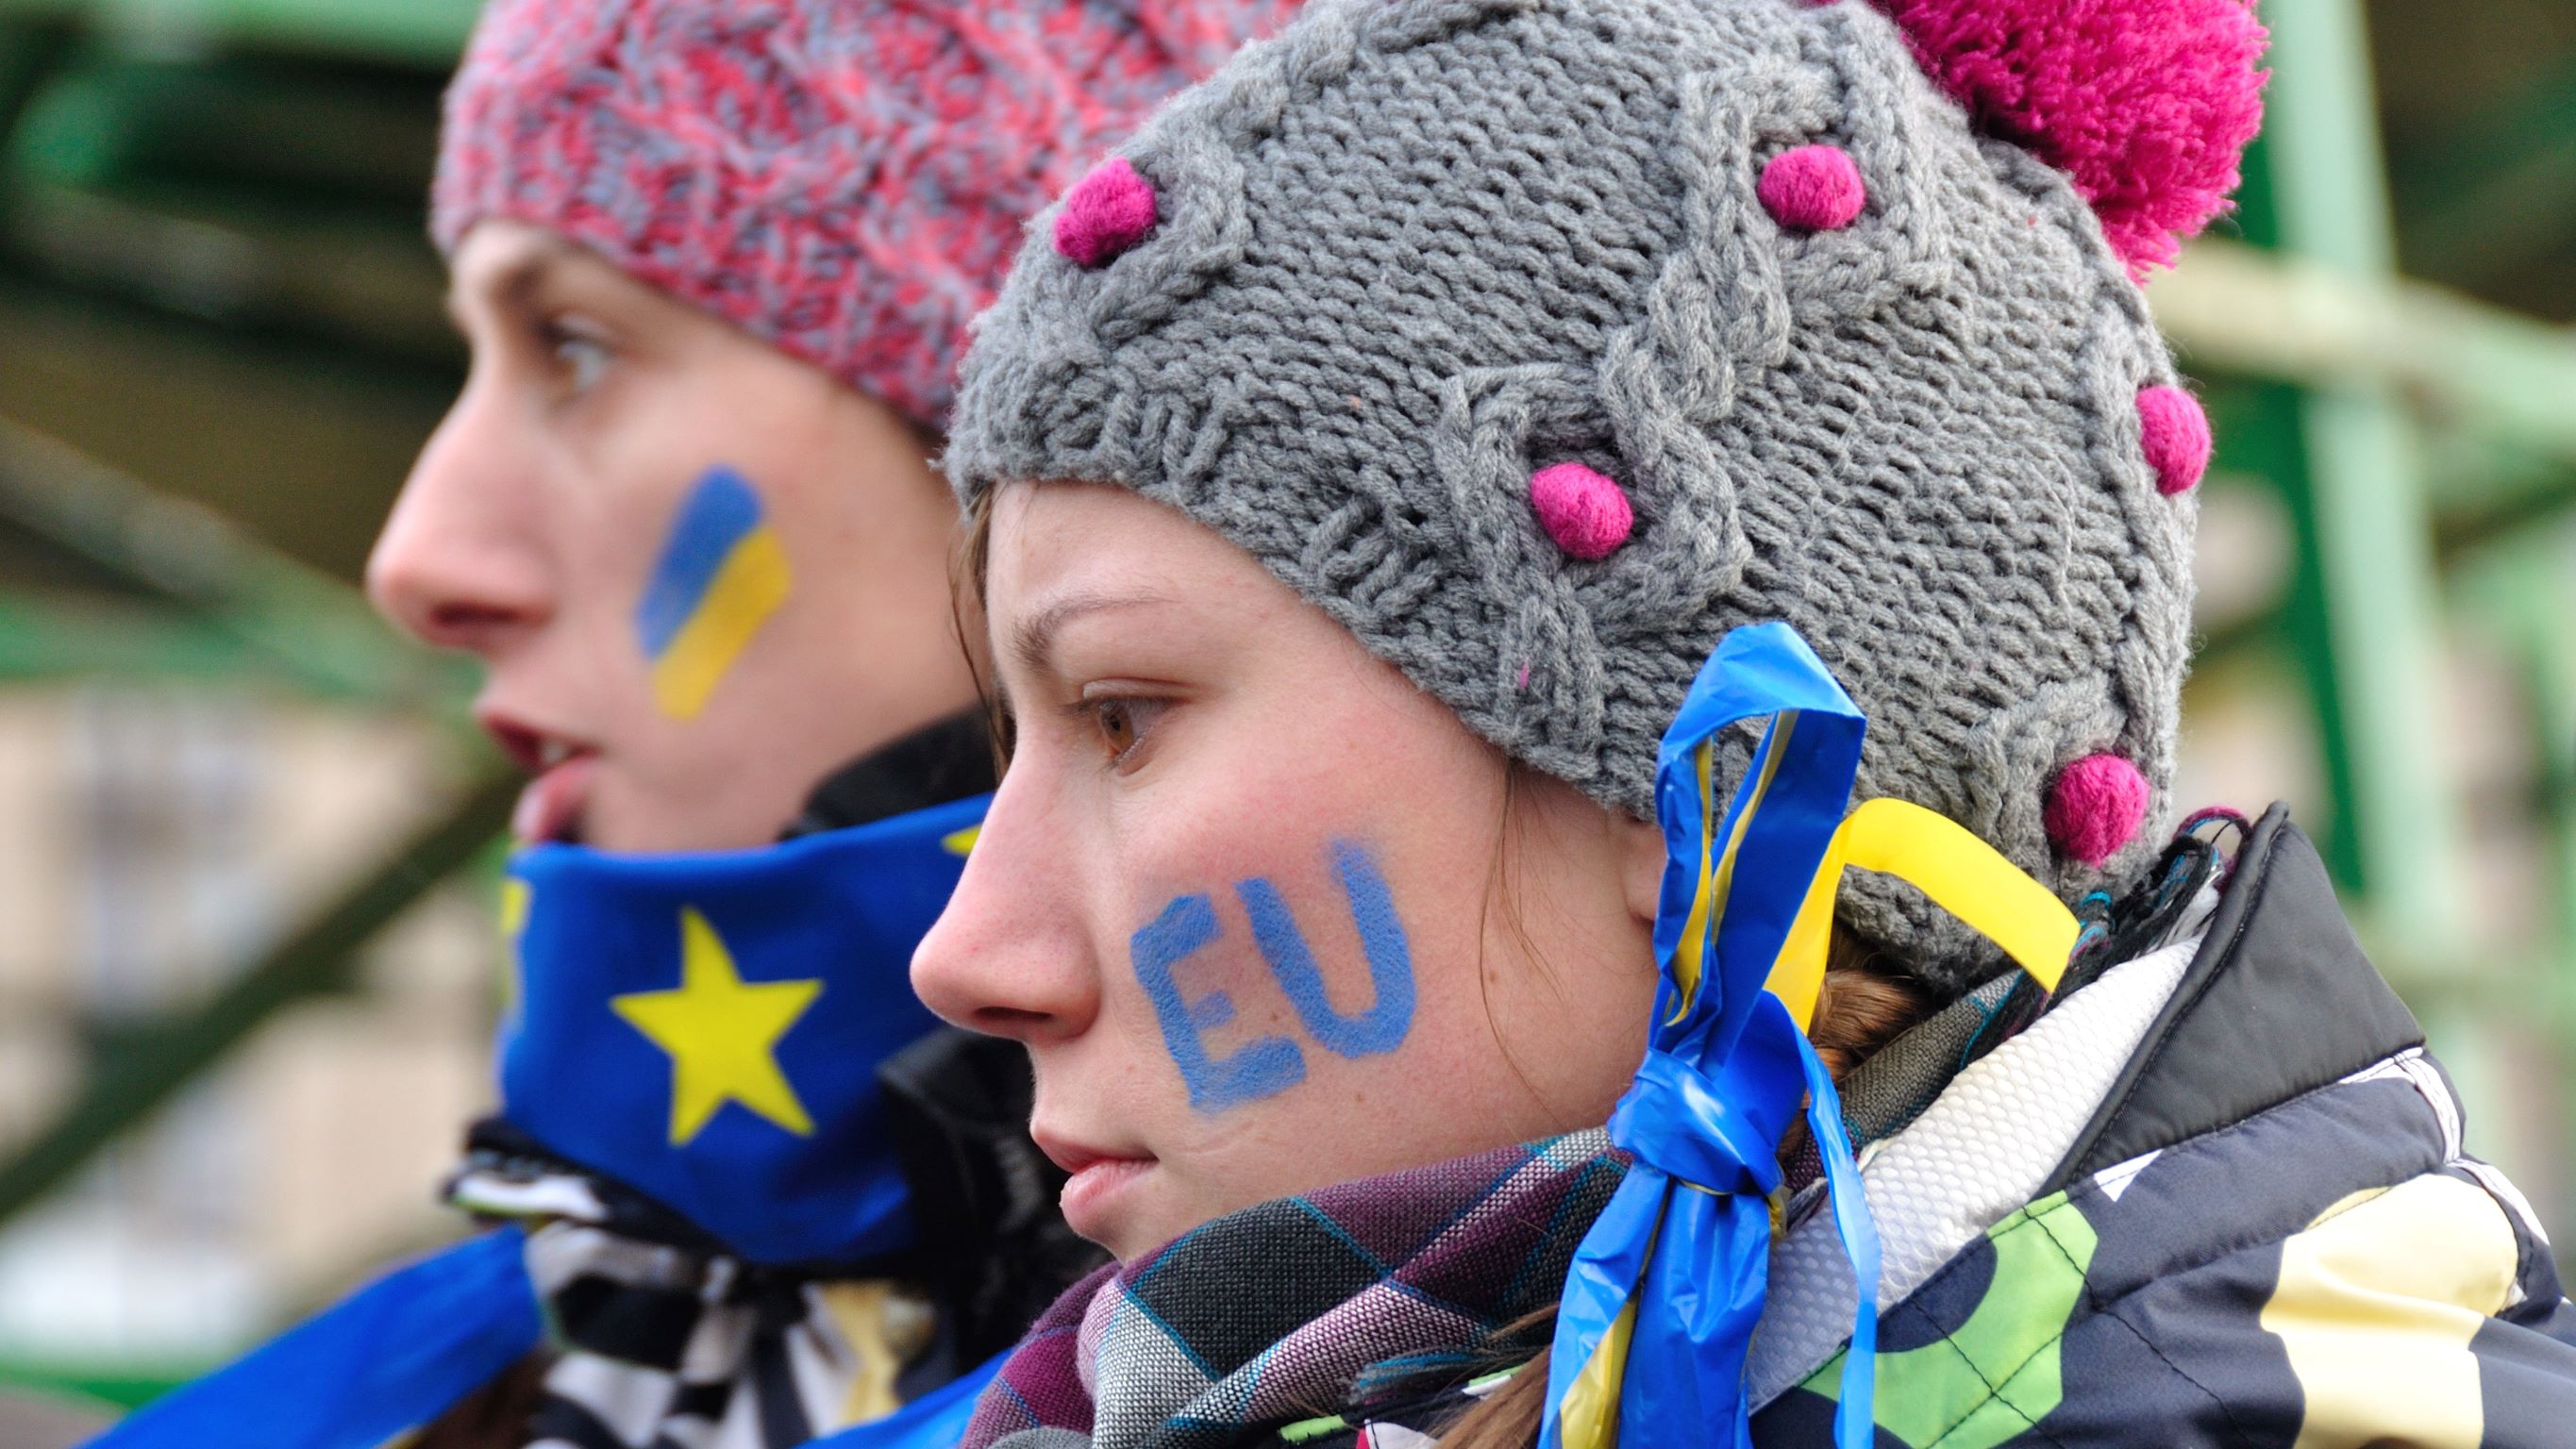 People wearing Ukraine and EU flag symbols